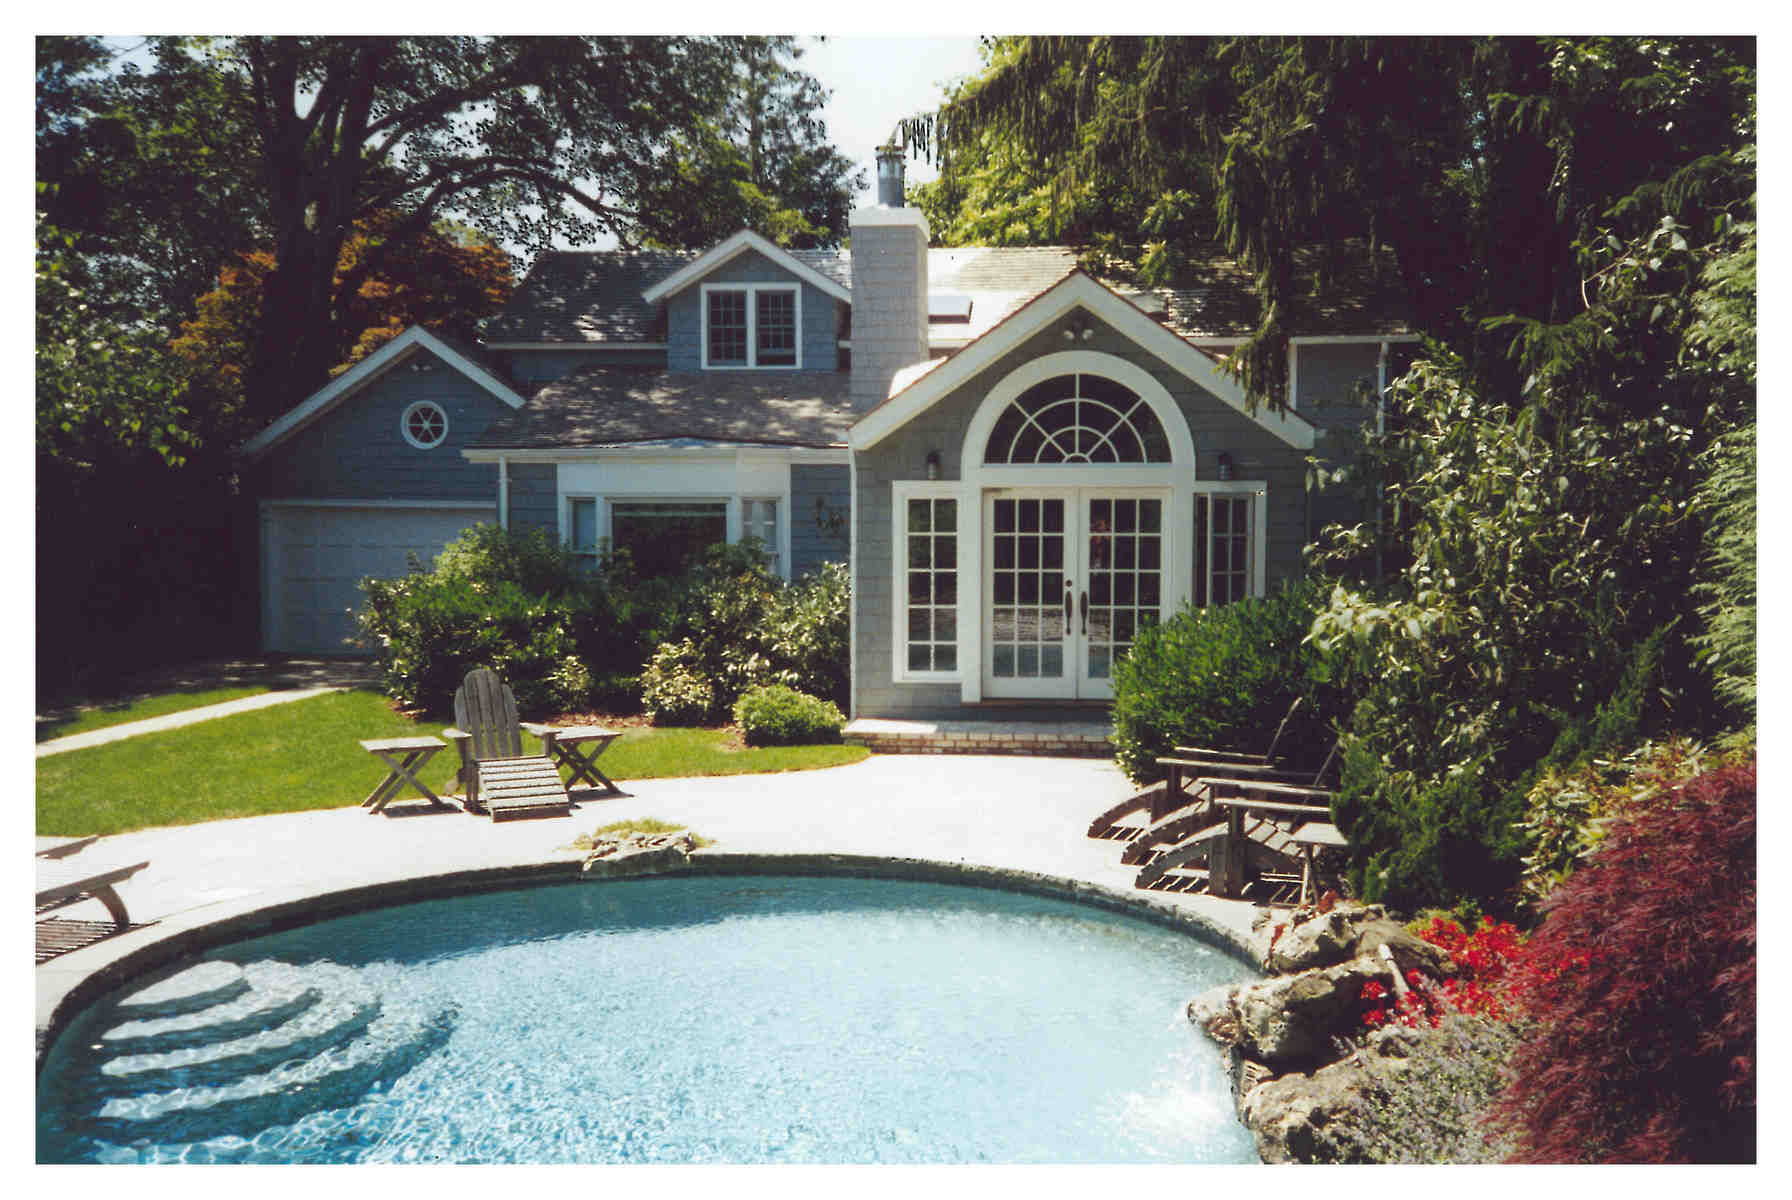 Rental Property at Village Of East Hampton, Village Of East Hampton, Hamptons, NY - Bedrooms: 3 
Bathrooms: 3  - $45,000 MO.